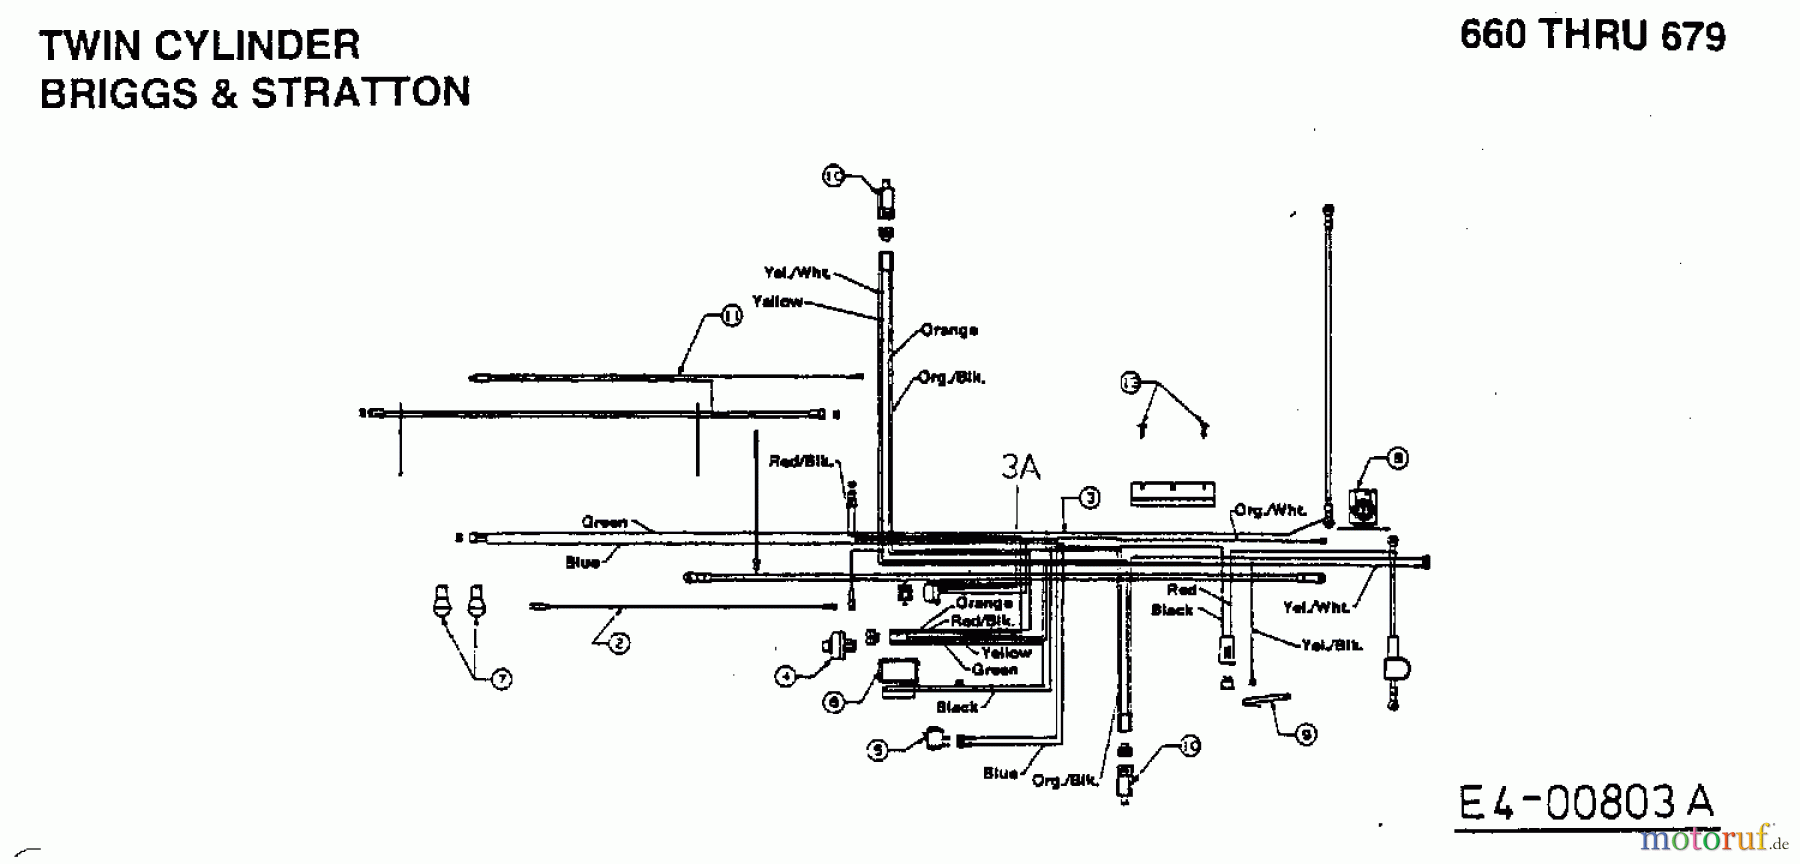  MTD Lawn tractors H 125 13AH690F678  (1998) Wiring diagram twin cylinder